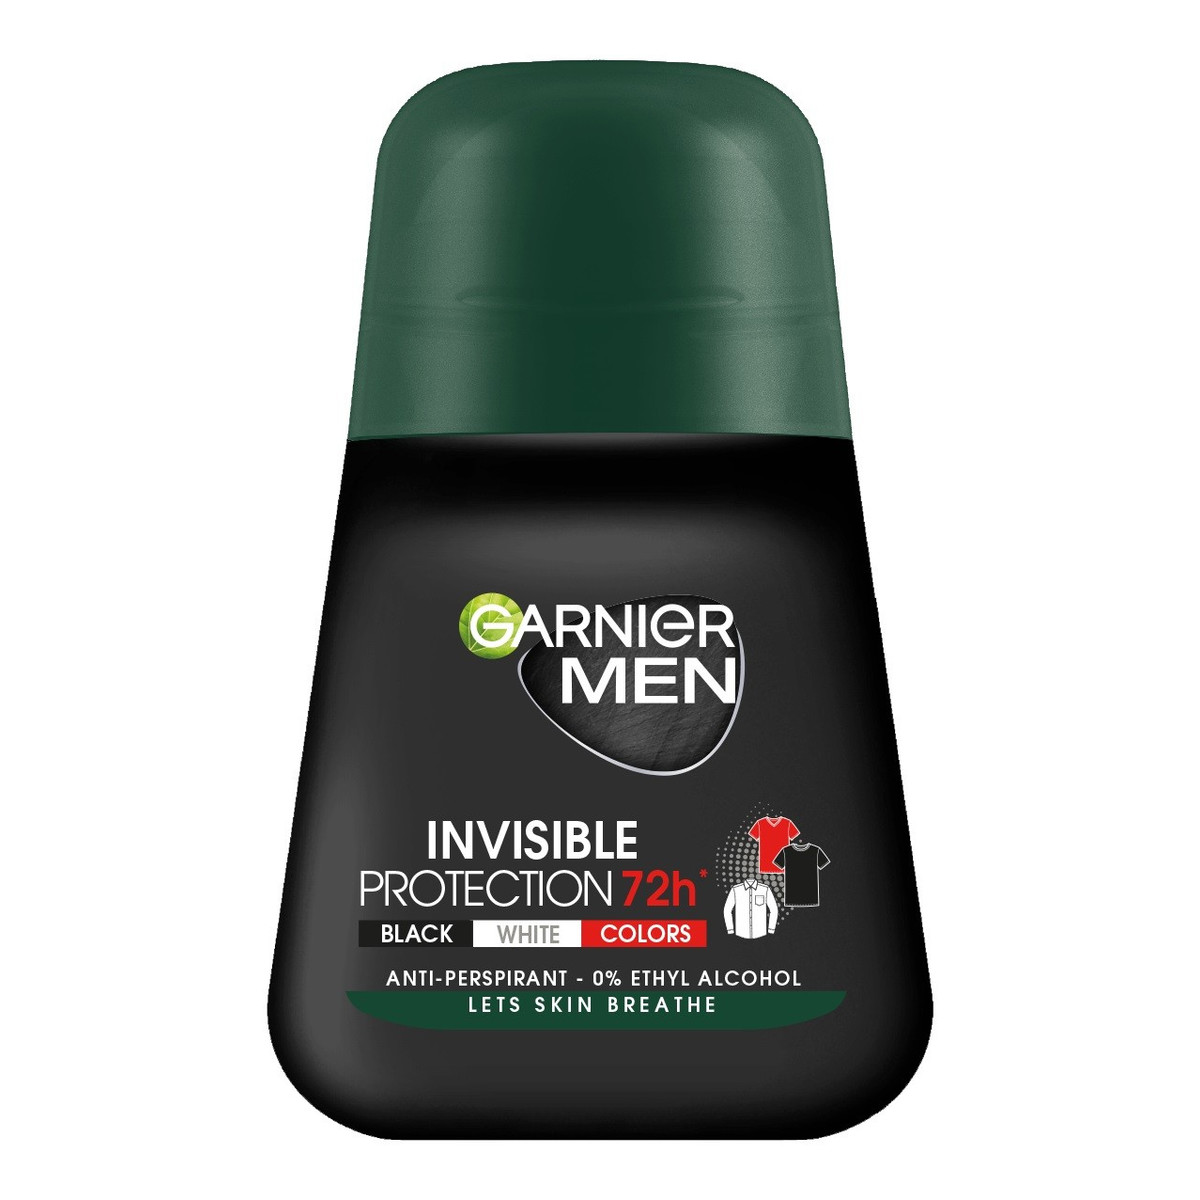 Garnier Men Dezodorant roll-on Invisible Protection 72h - Black White Colors 50ml